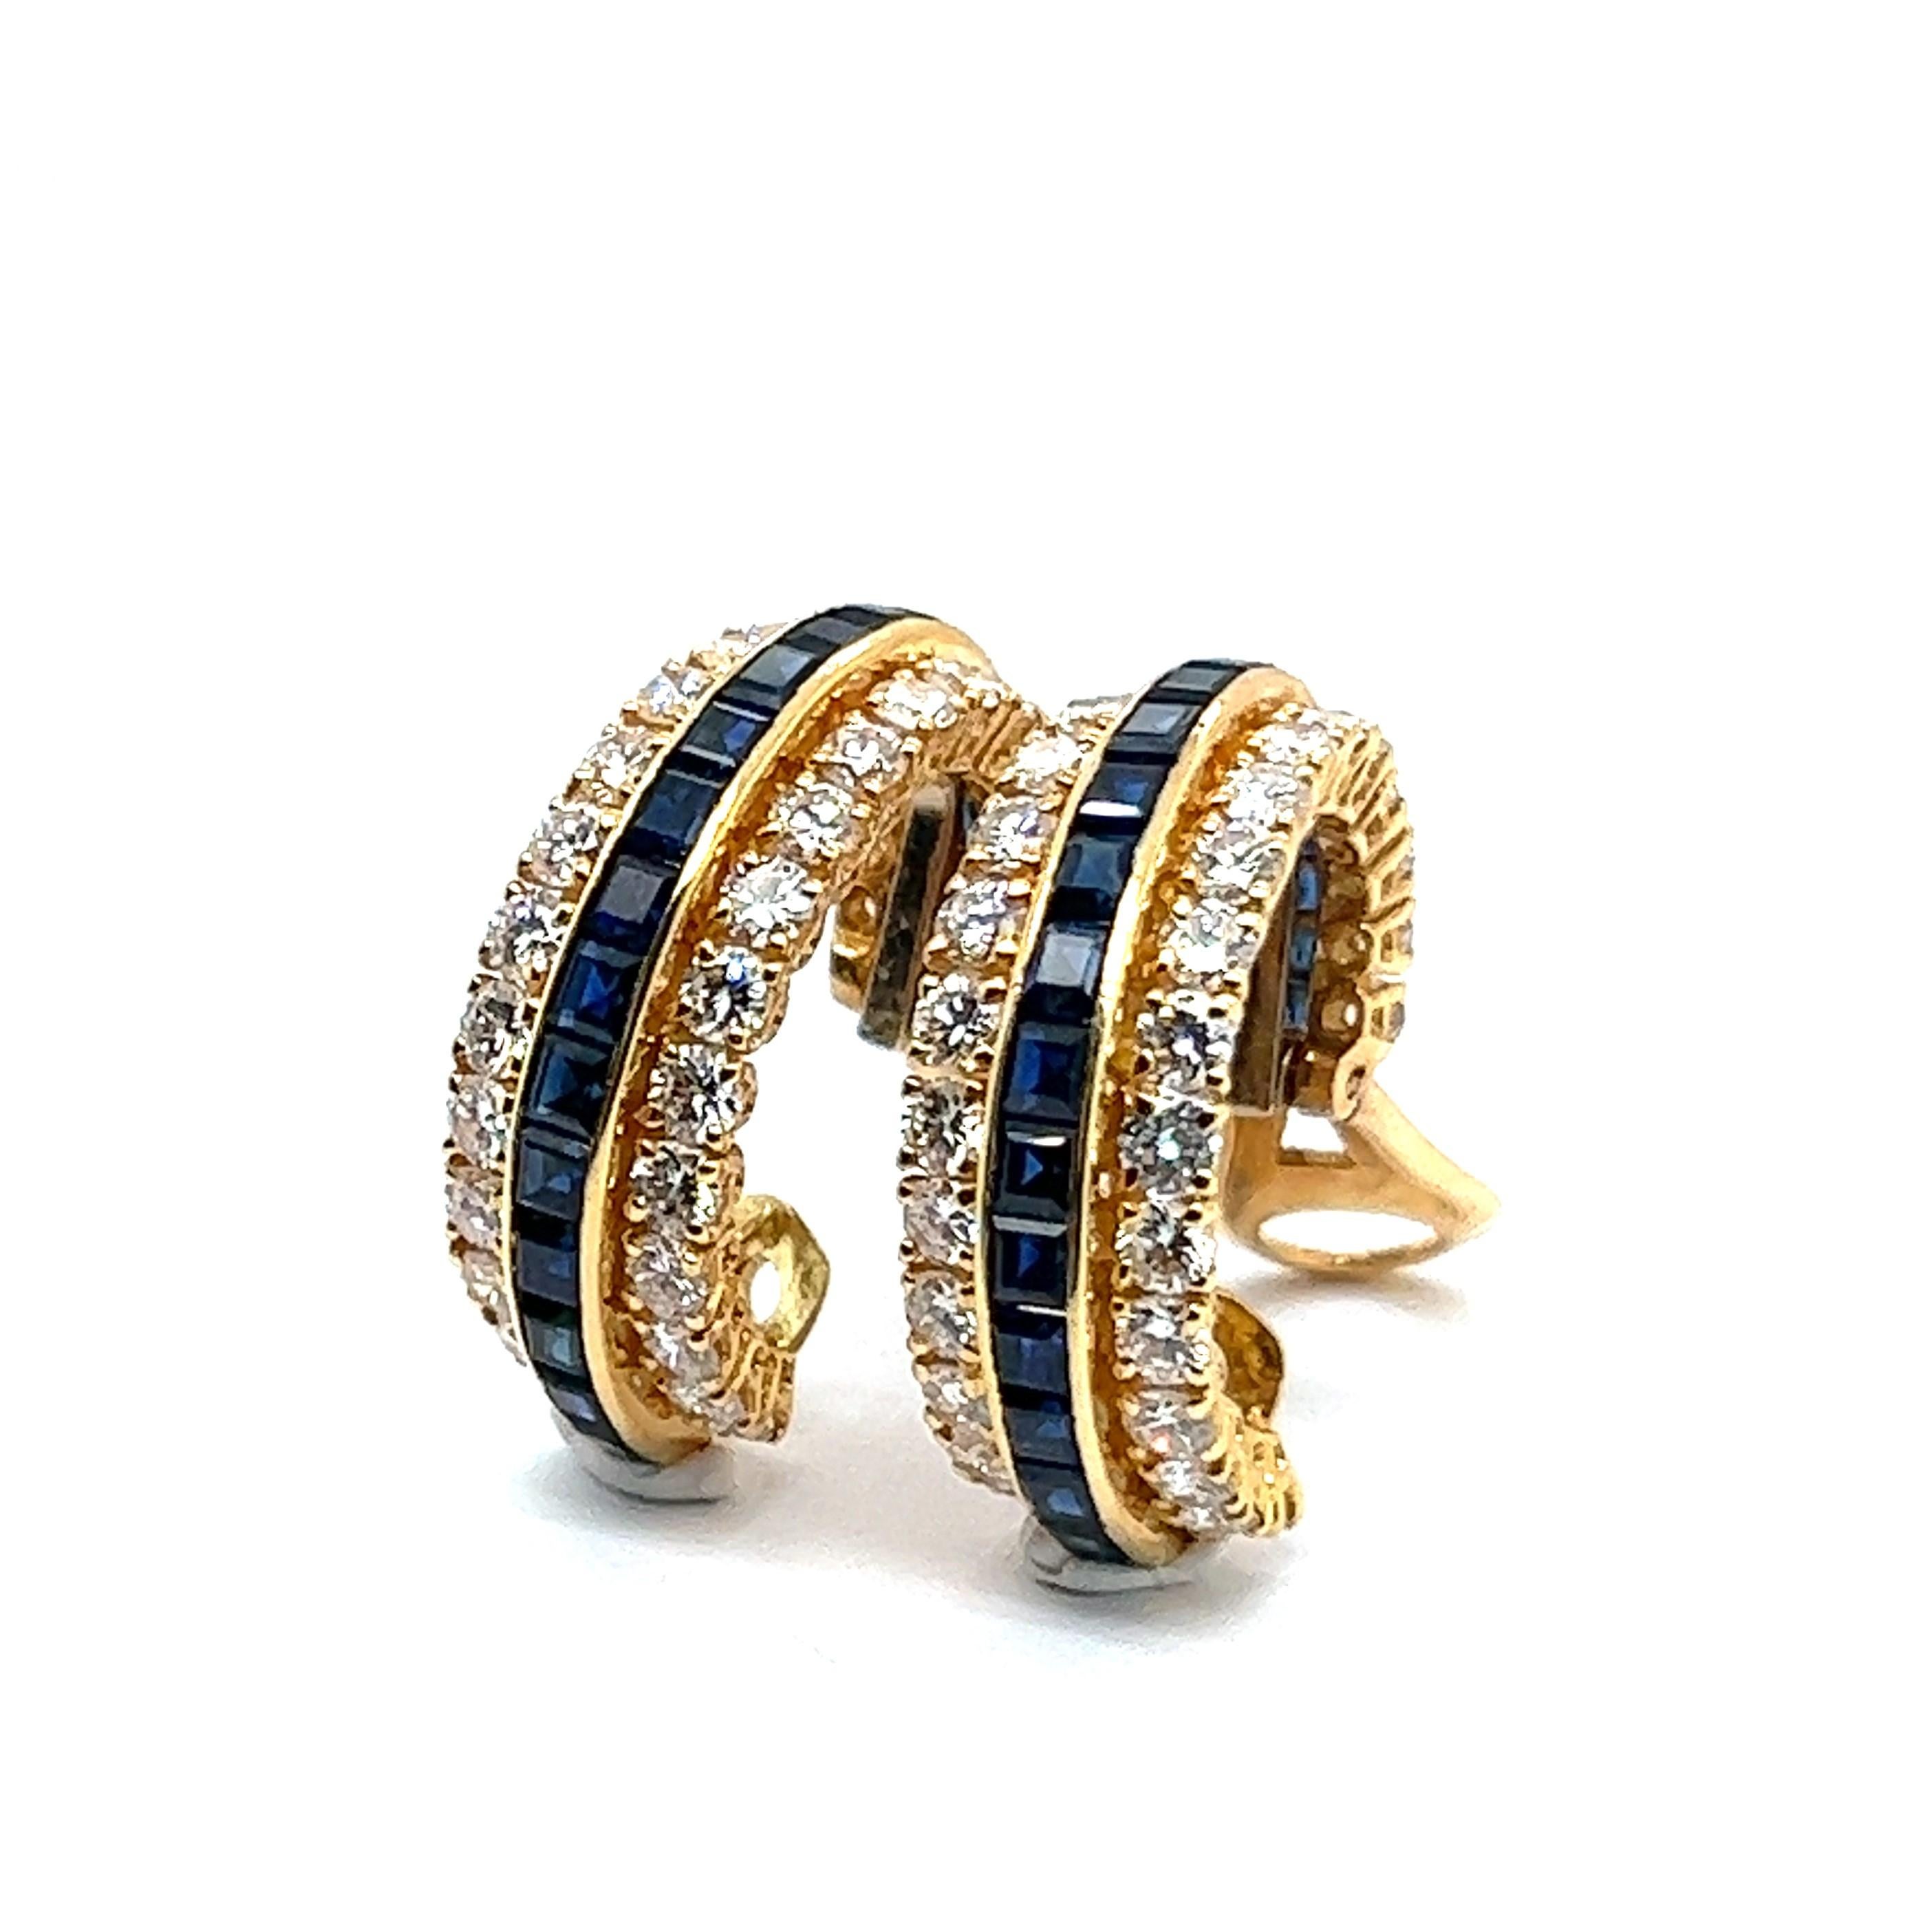 Elegant Van Cleef & Arpels Earclips in 18K Gold with Sapphires and Diamonds 2